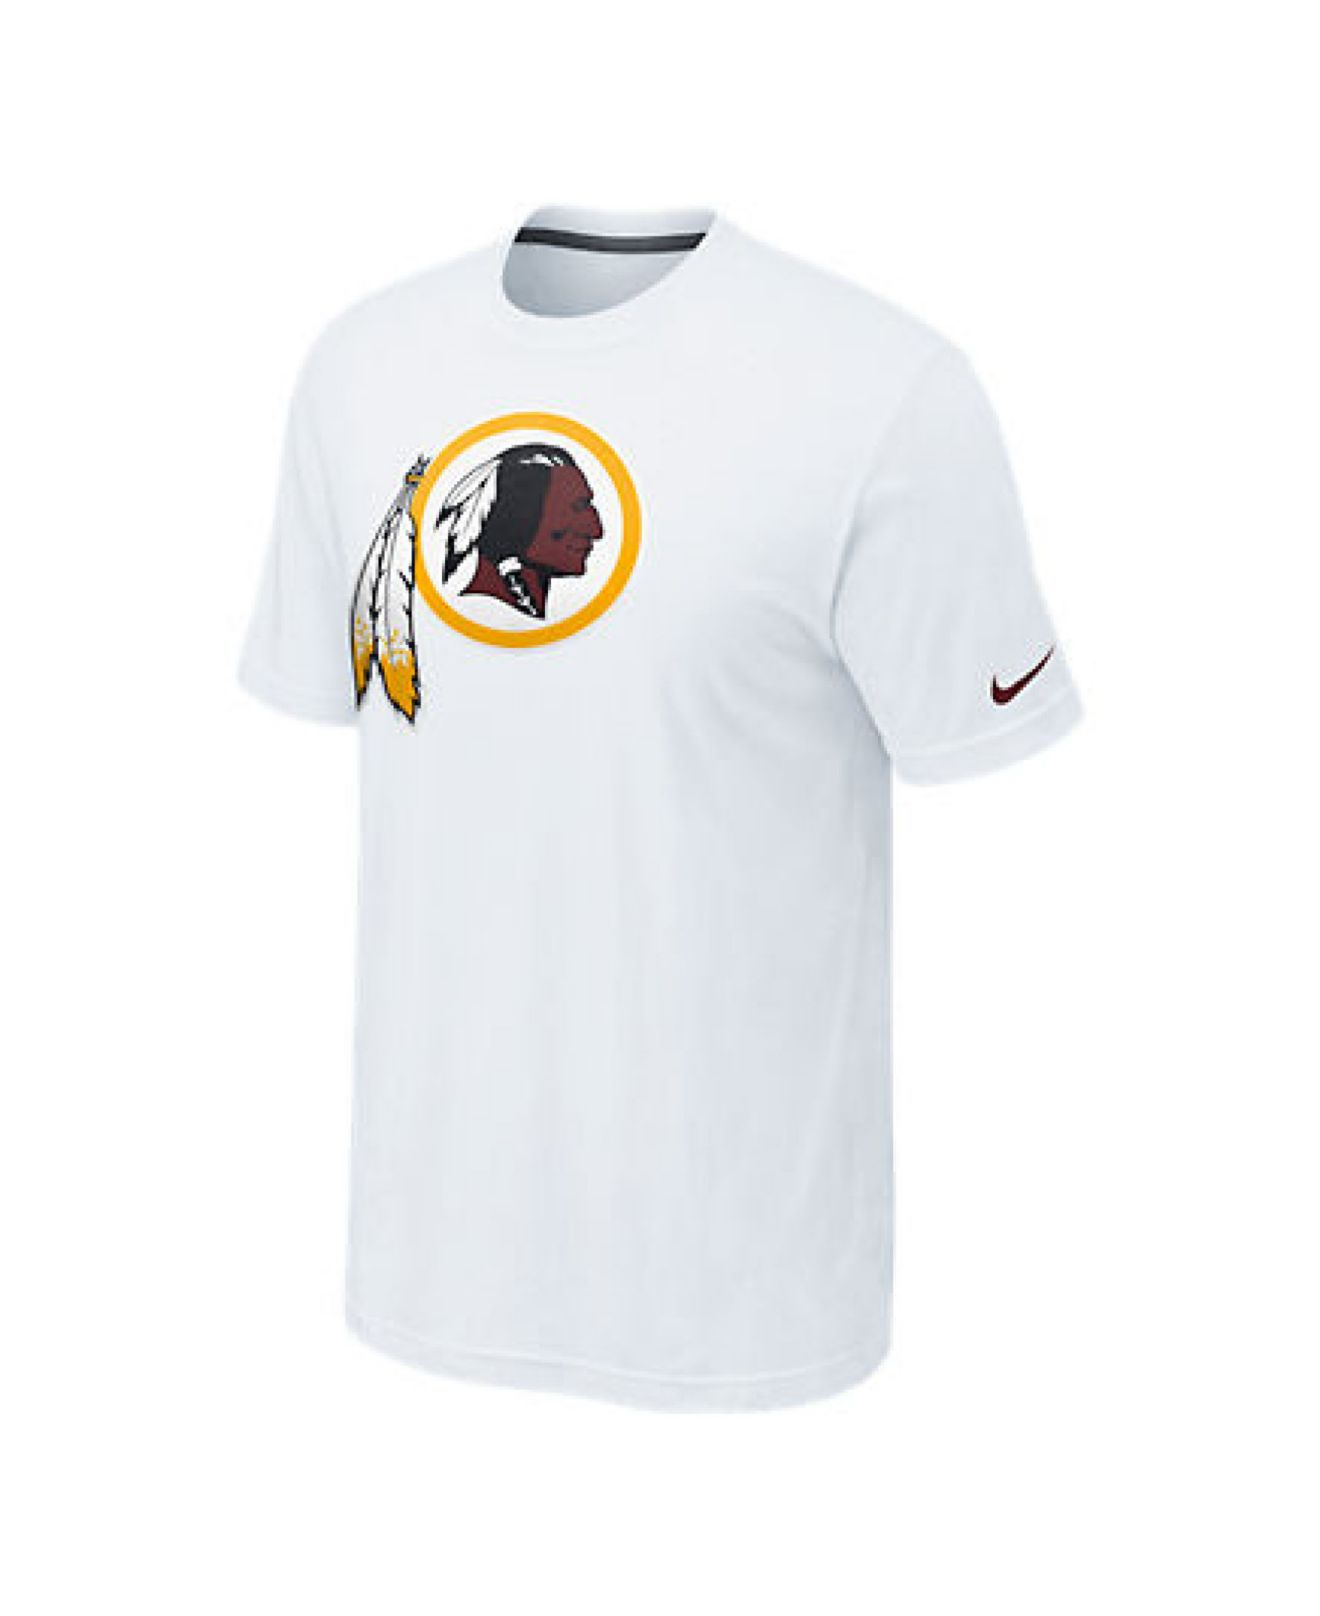  NFL Team Apparel Washington Redskin Football T-shirt  Size 4/5/6/7 Years 